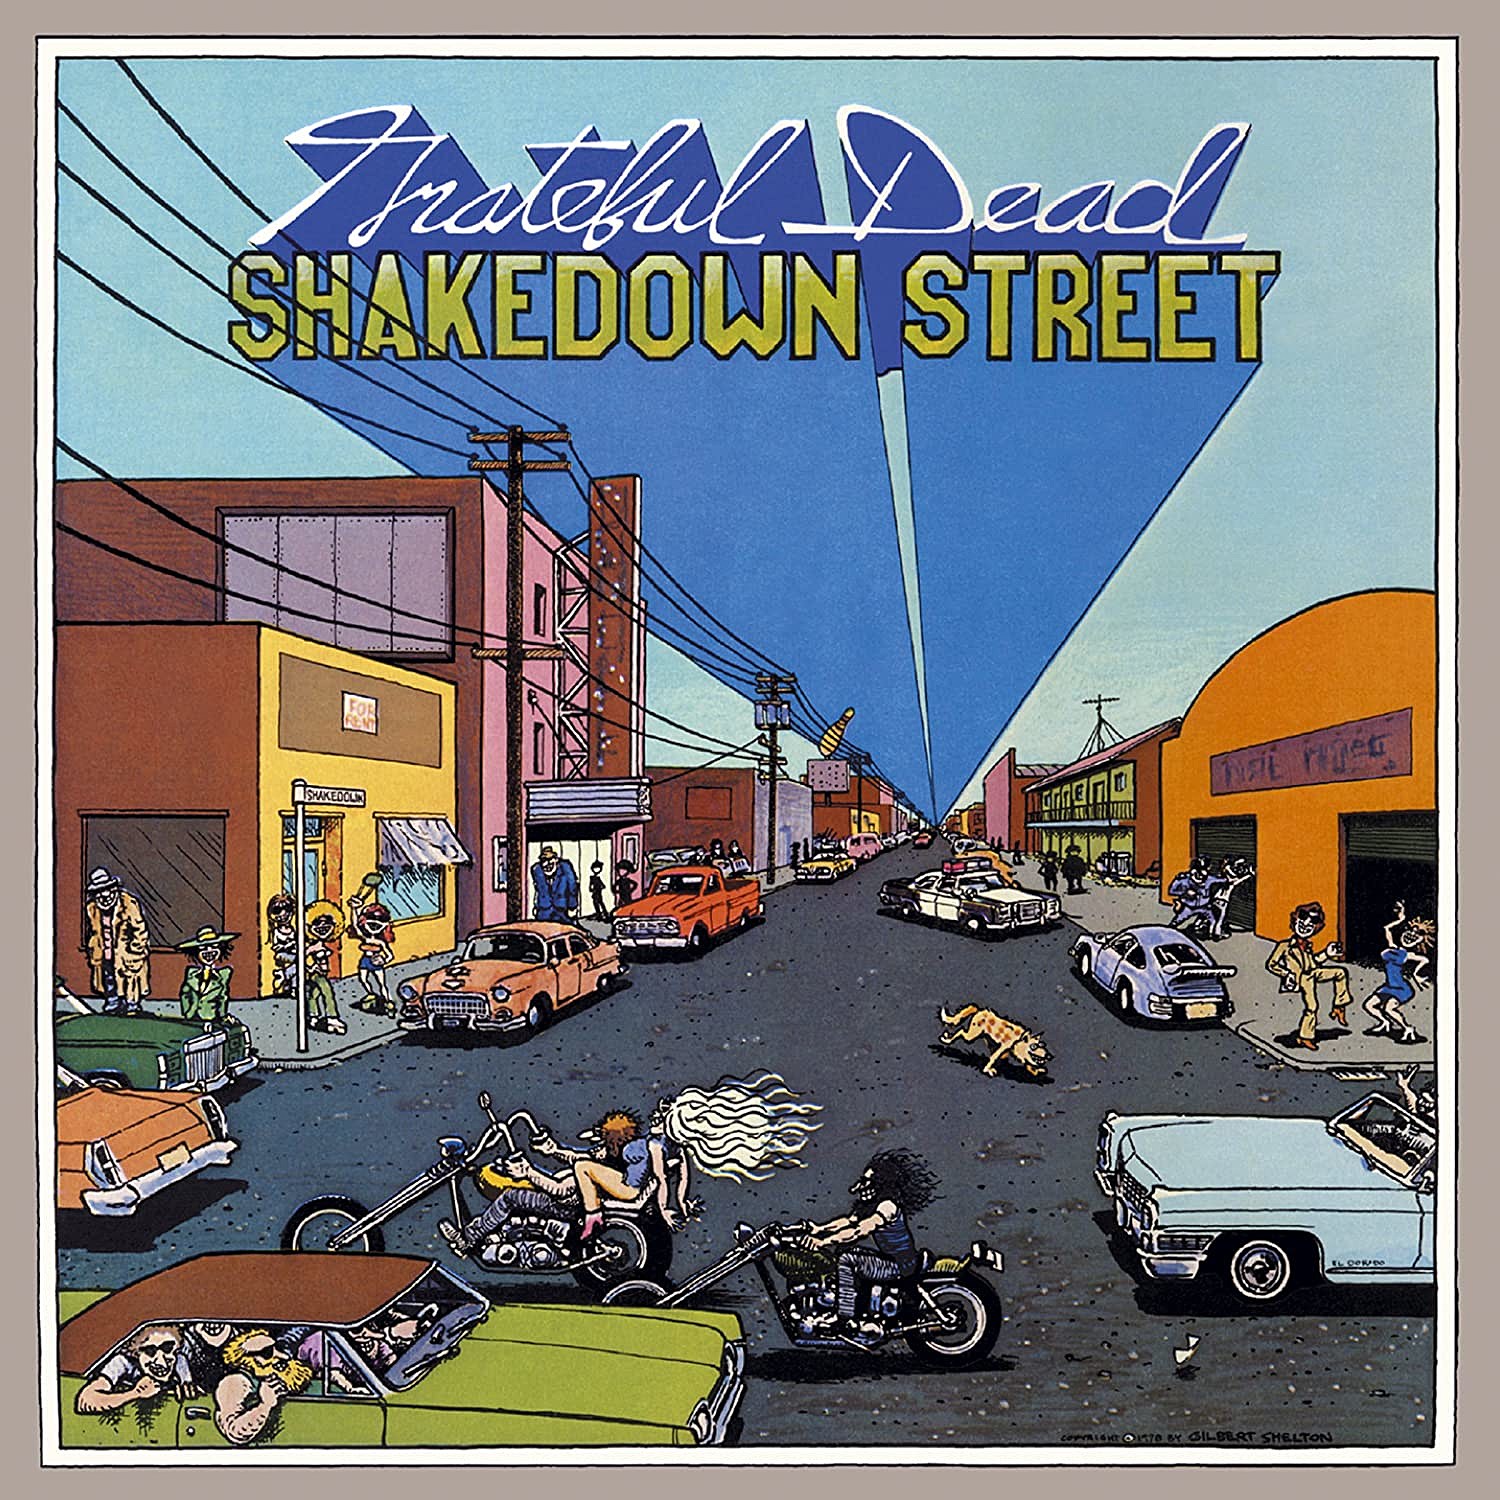 The Grateful Dead Shakedown Street